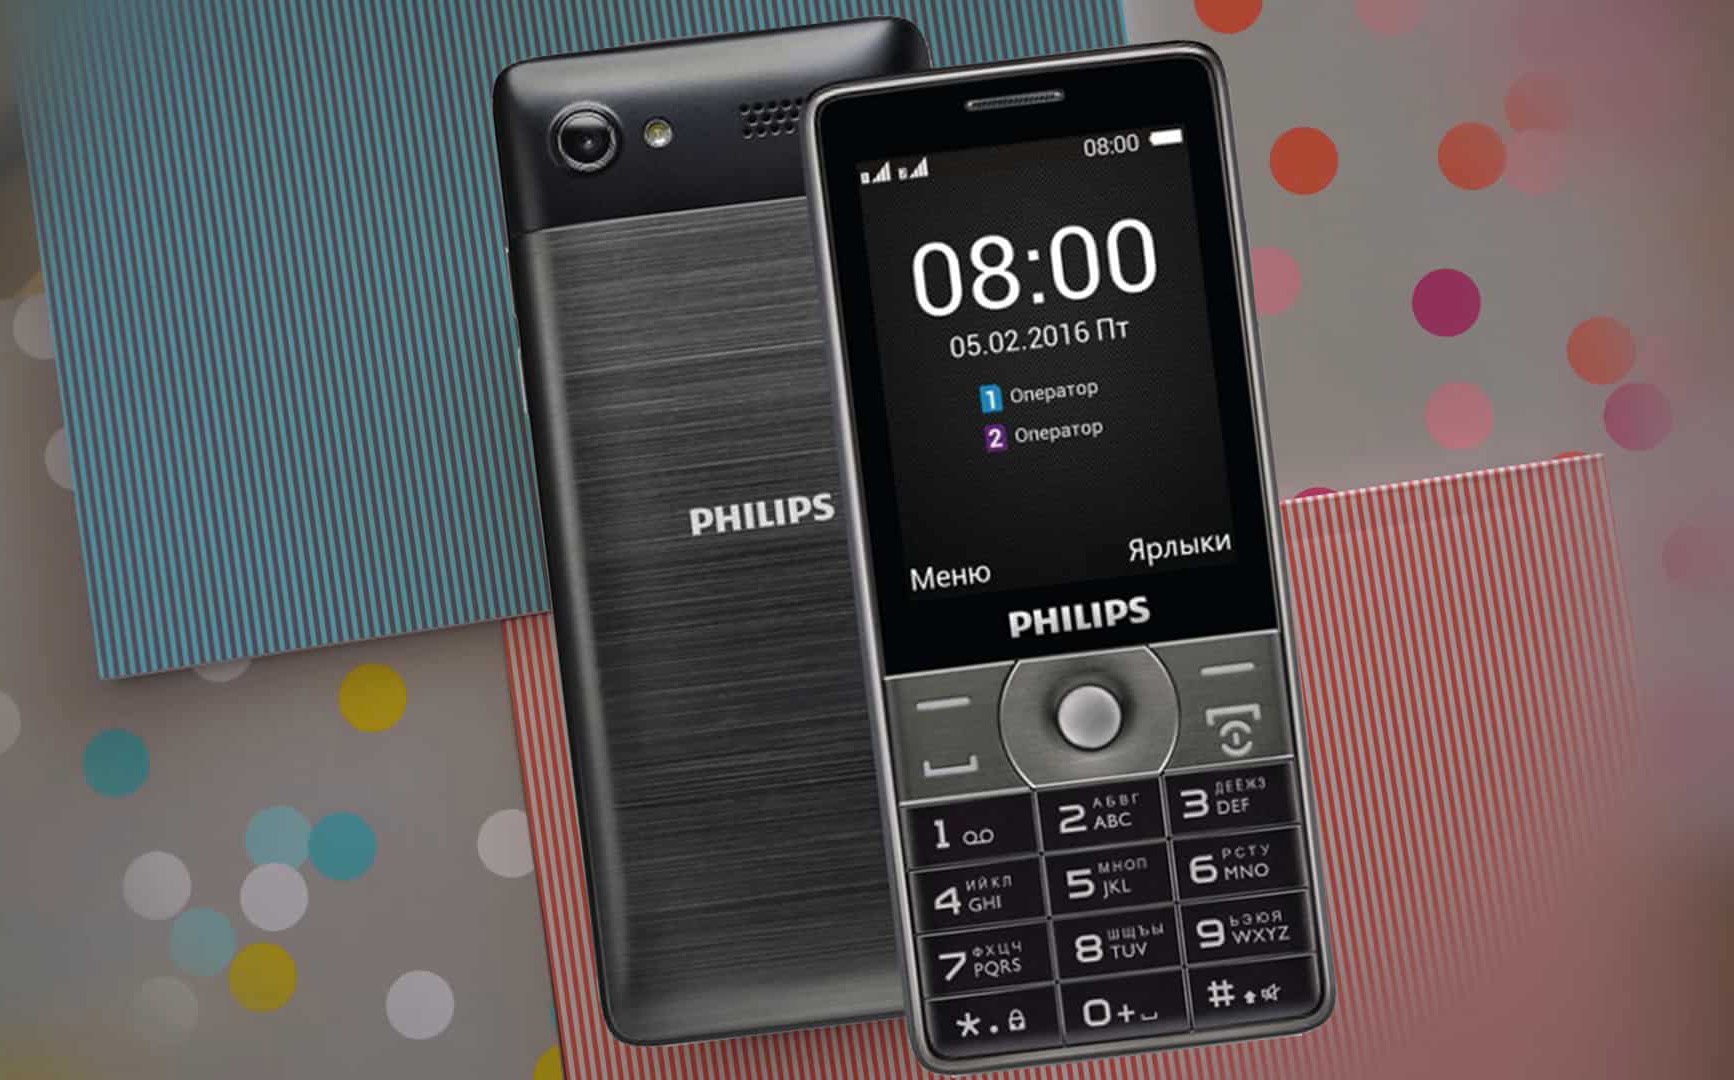 Philips xenium e125